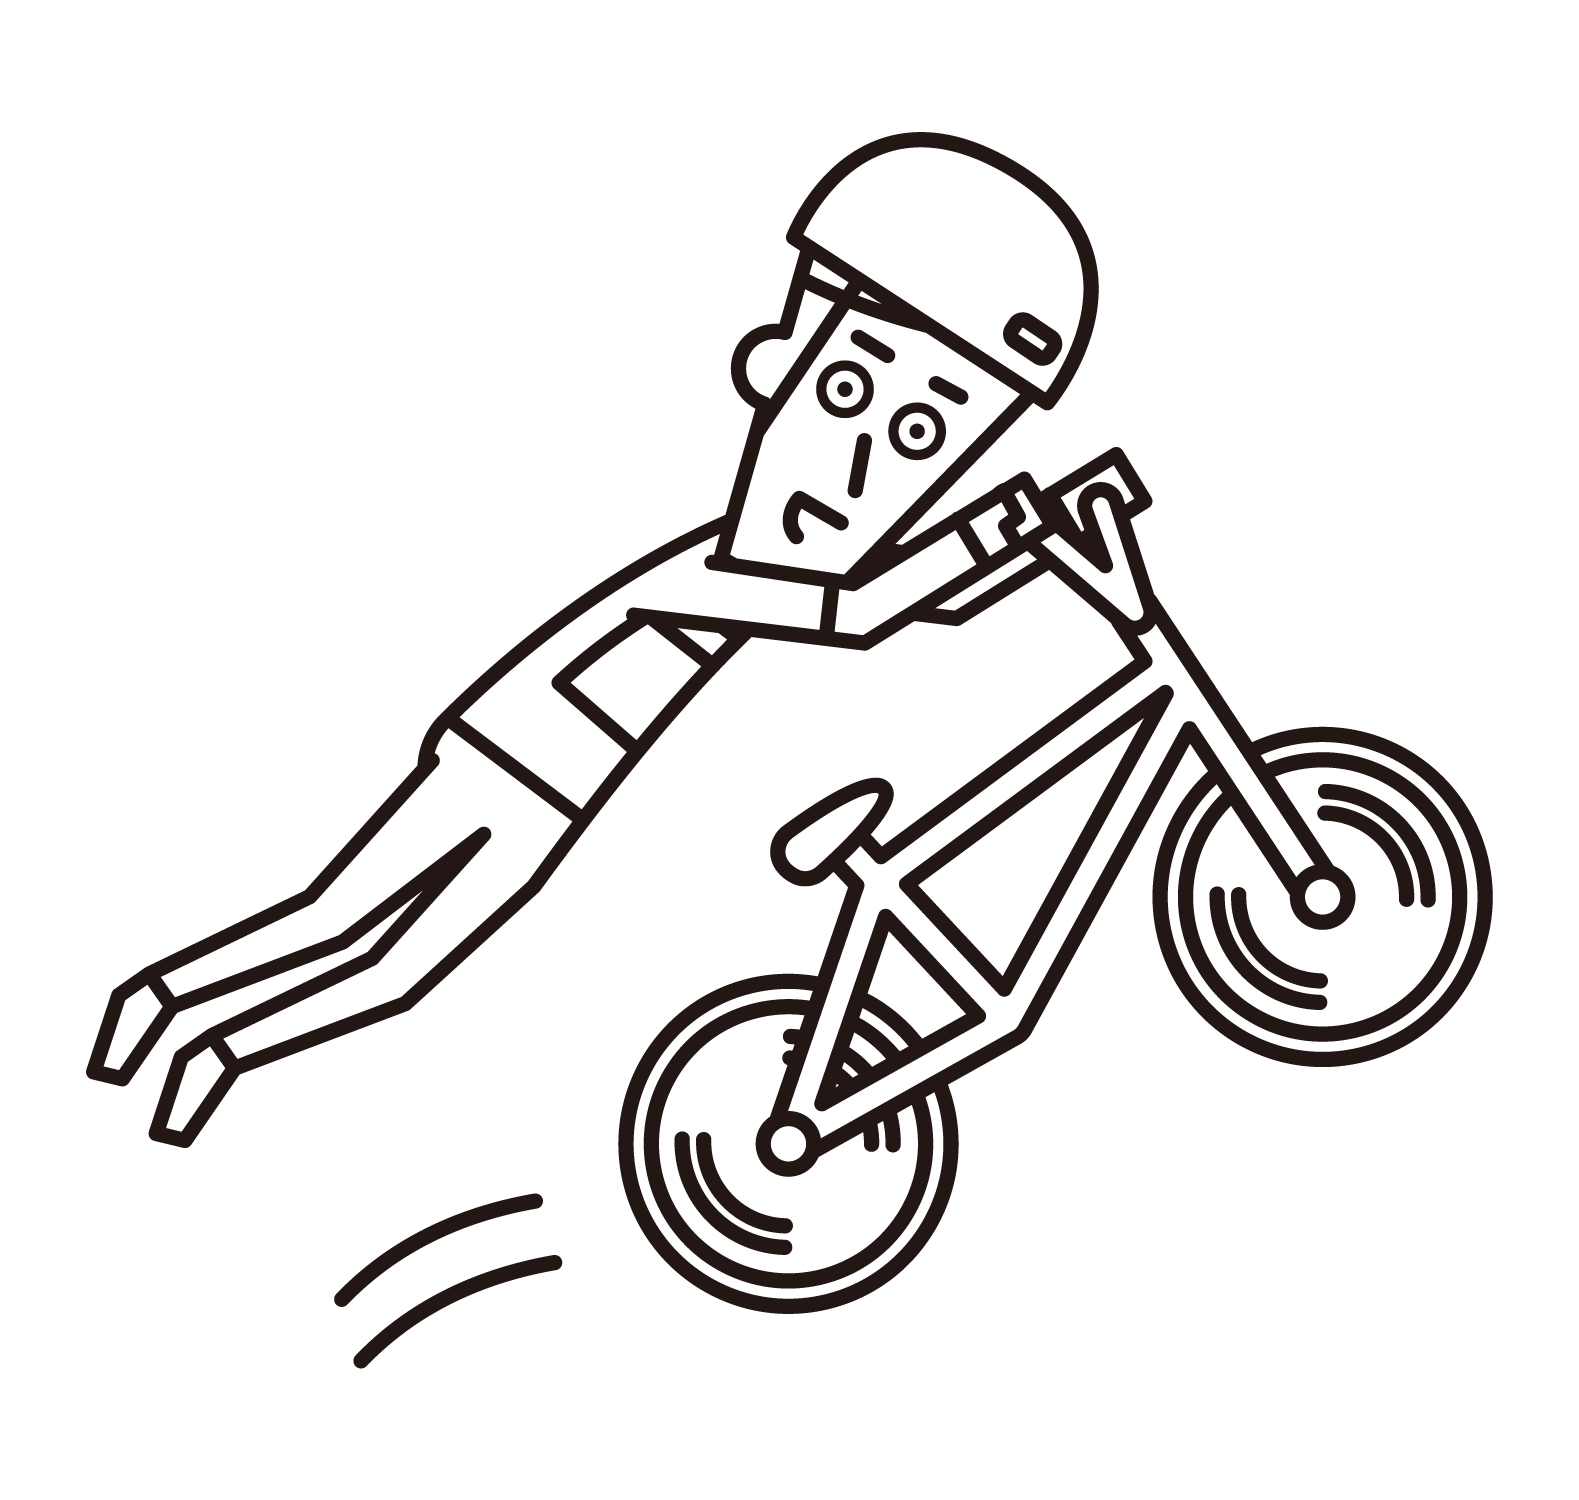 Illustration of bMX player (male) jumping on BMX